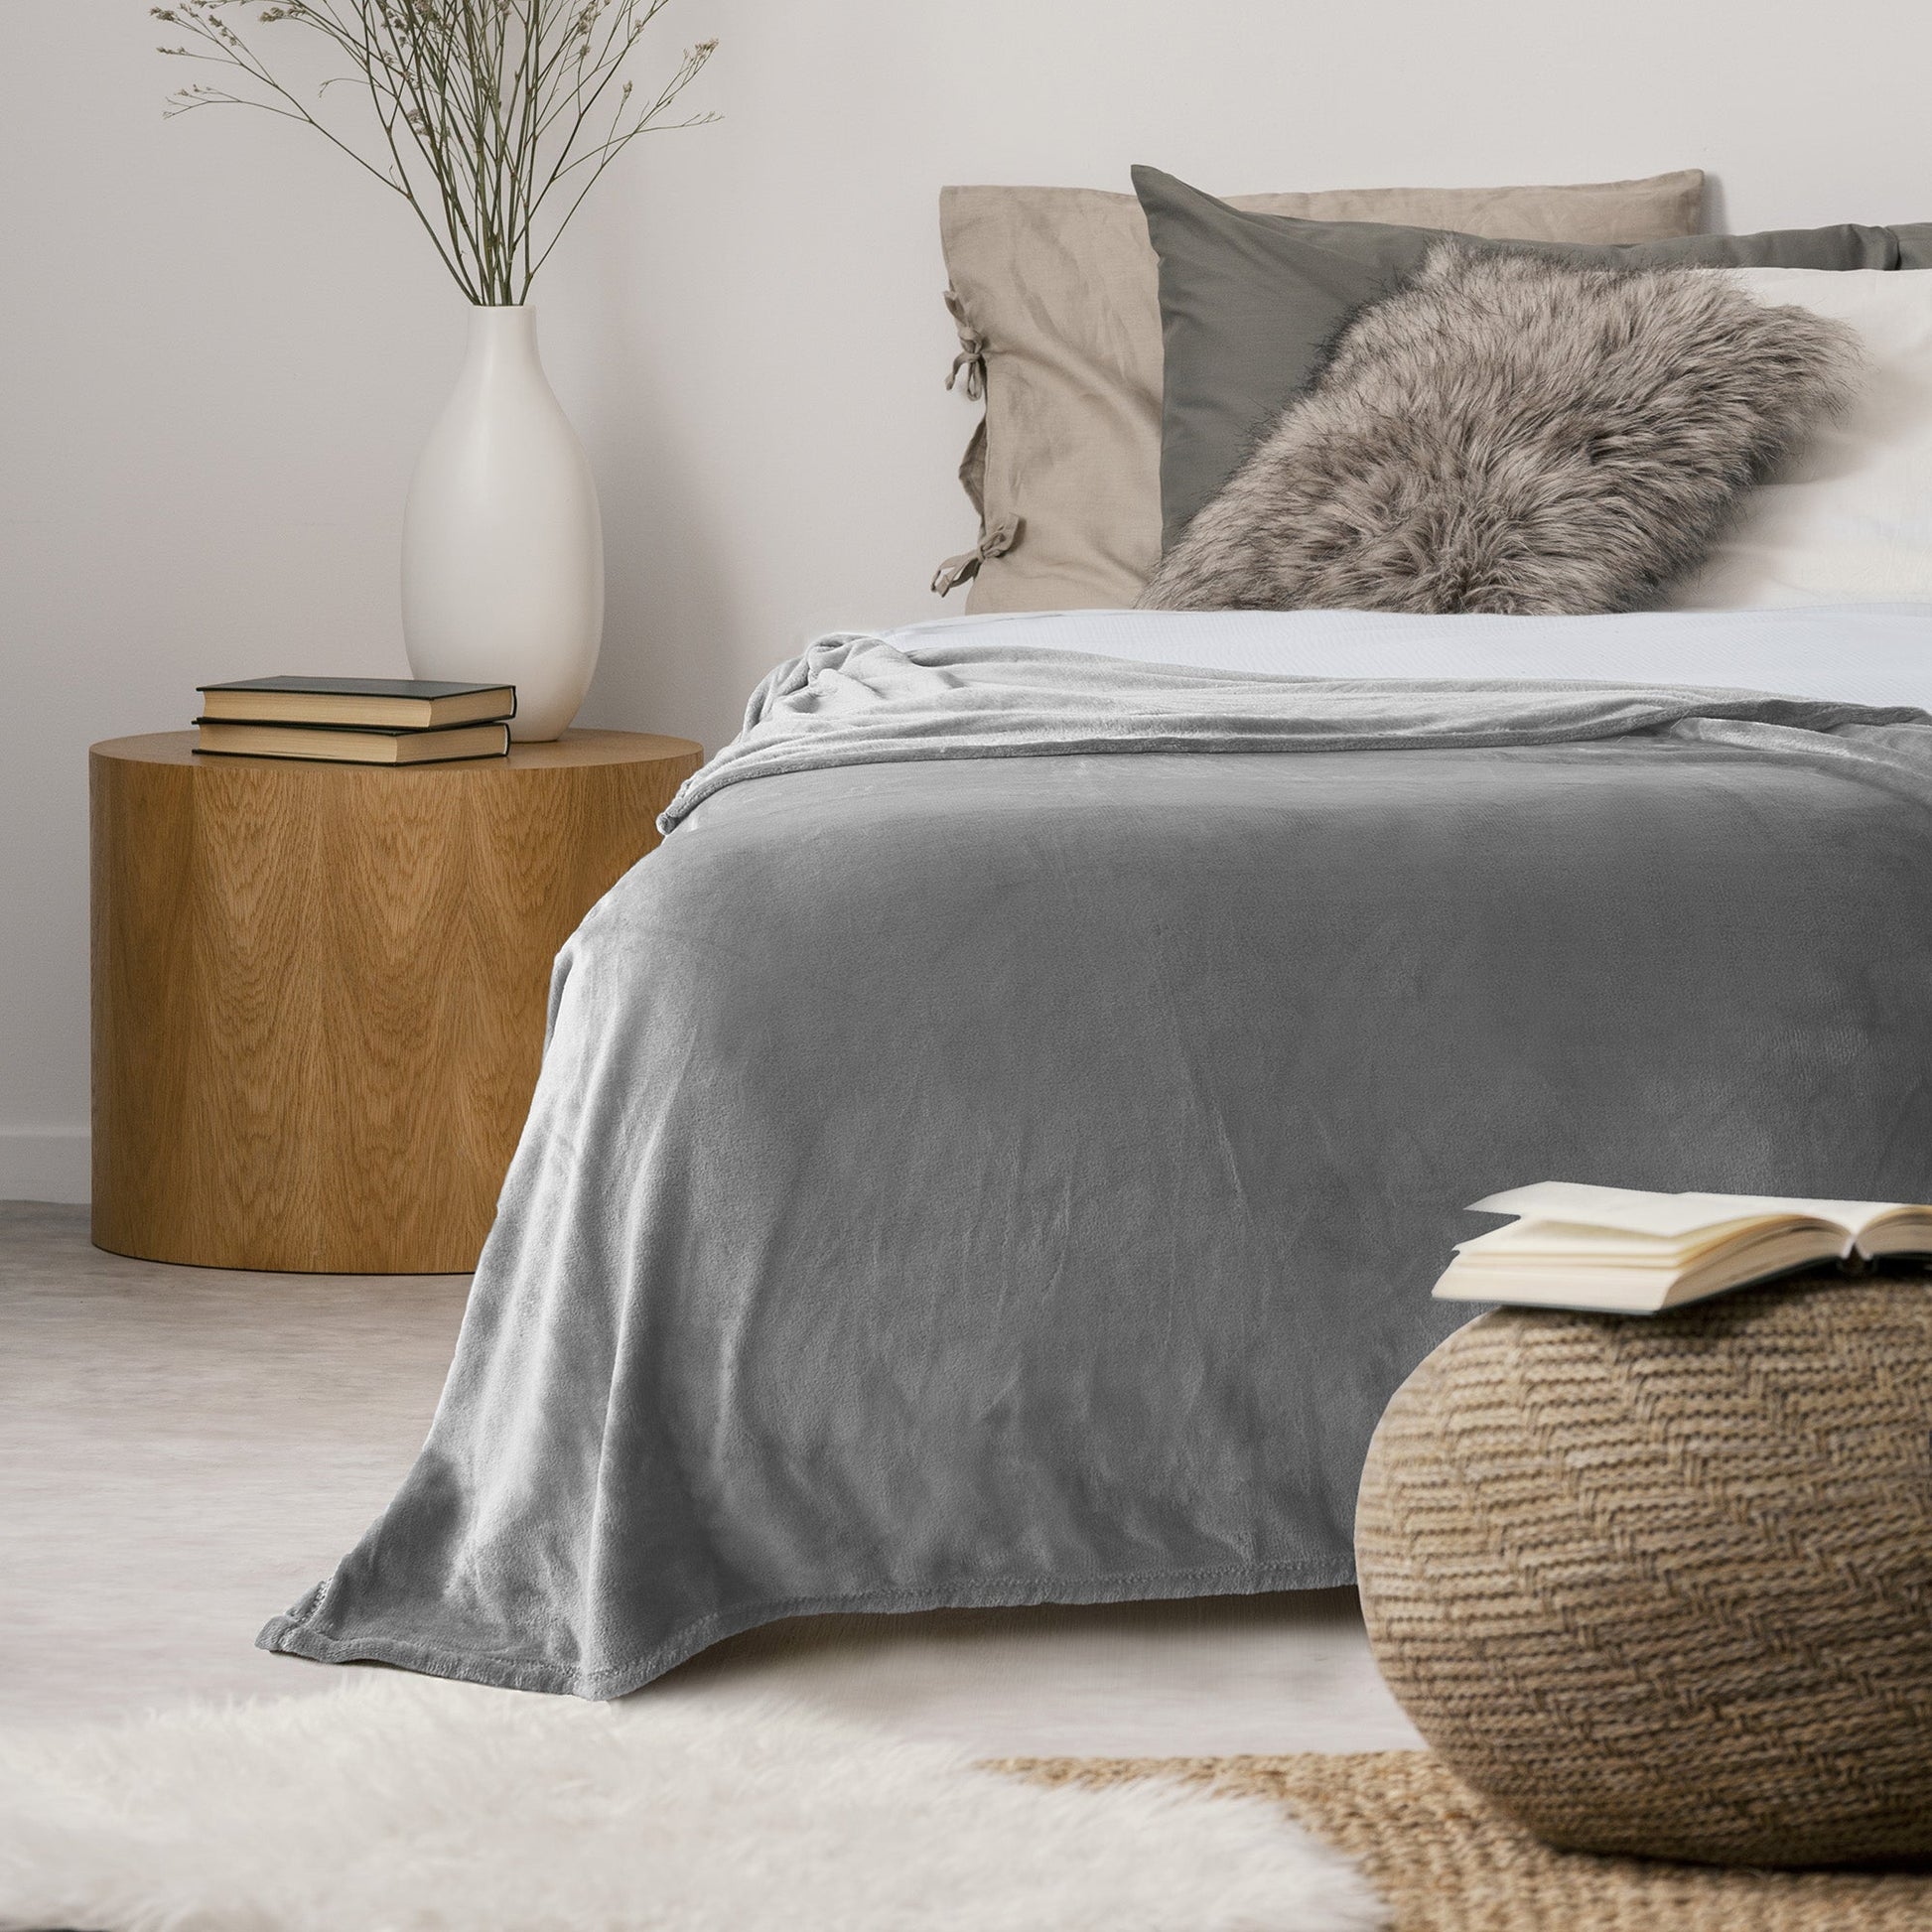 Super Soft Flannel Blanket Throw Home Decor Bedding 60X80 Silver - DecoElegance - Blanket Throw Home Bedding